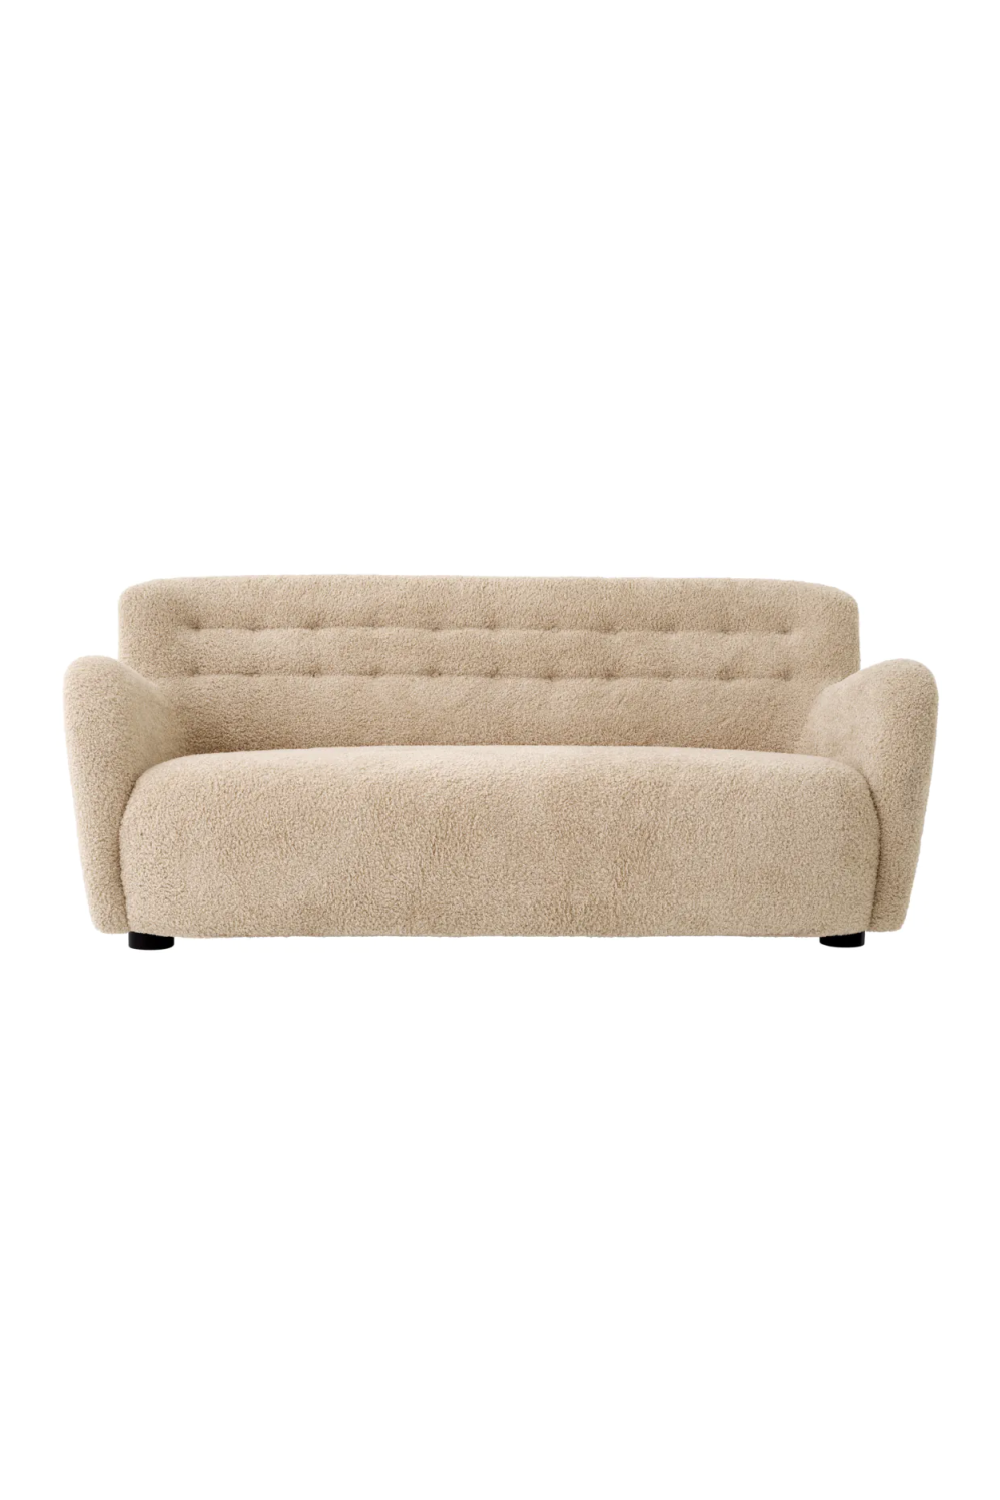 Beige Modern Classic Sofa | Eichholtz Bixby | Oroa.com